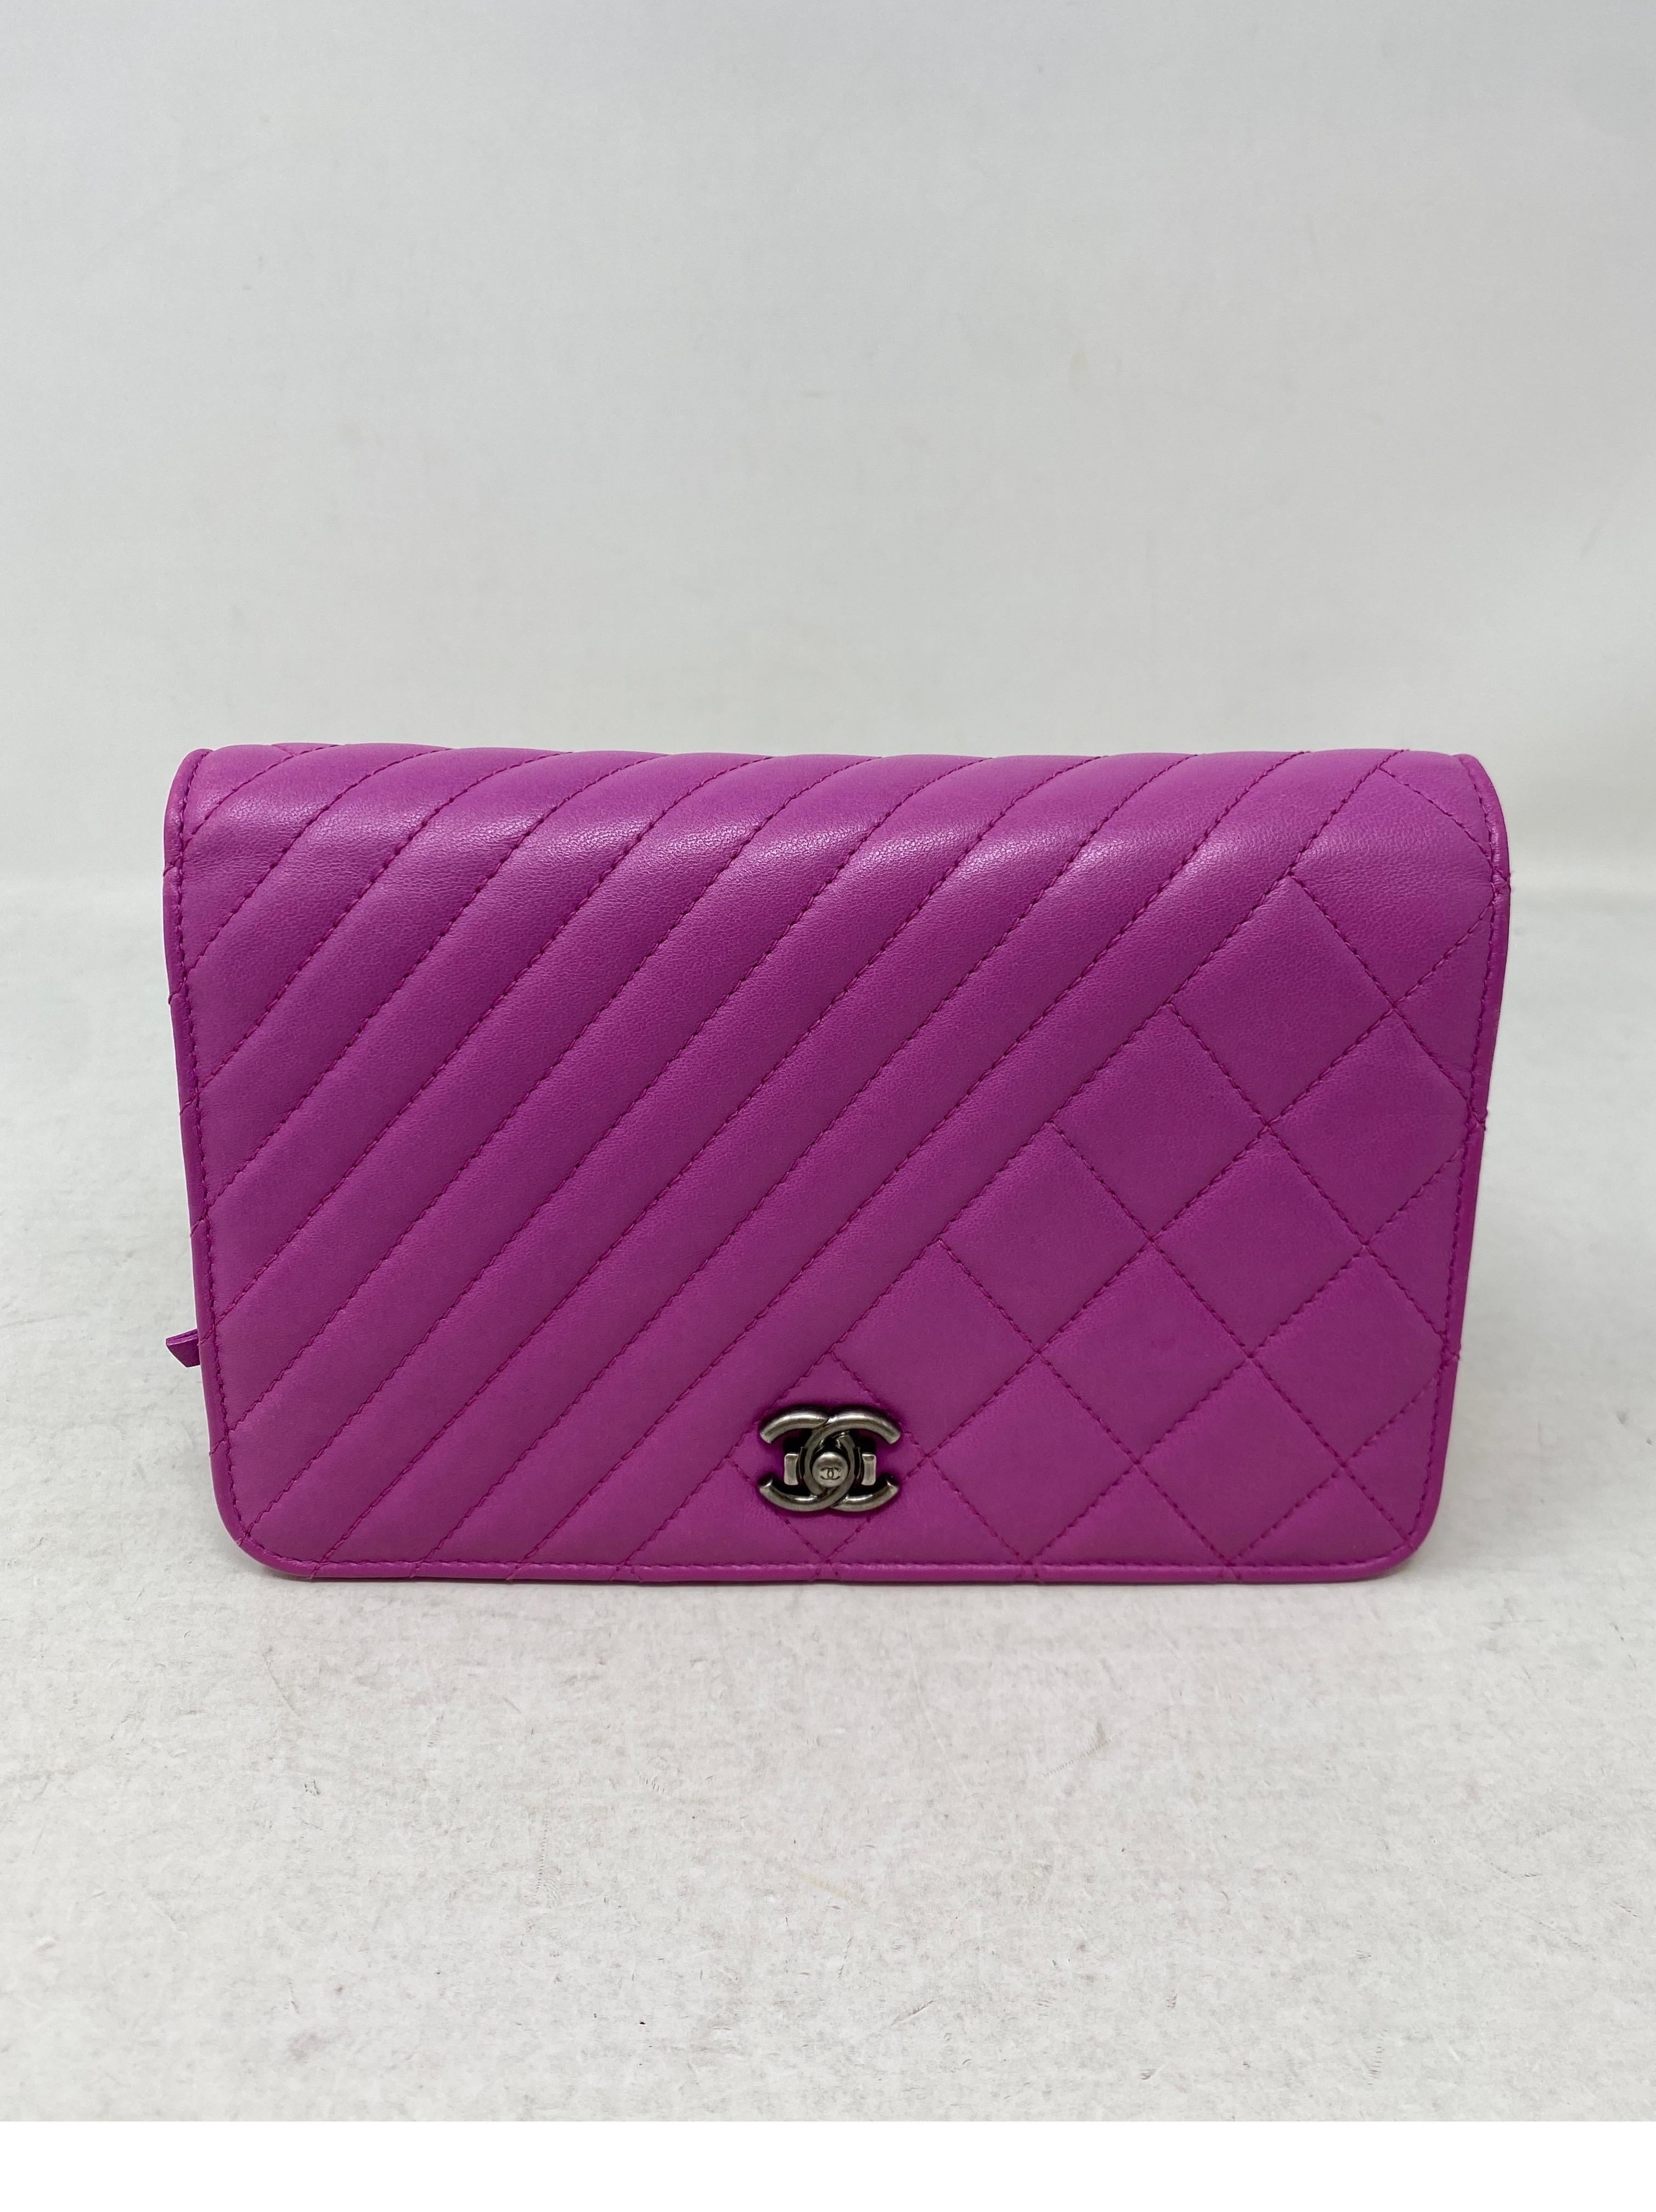 Chanel Fuschia Wallet On A Chain Bag  16